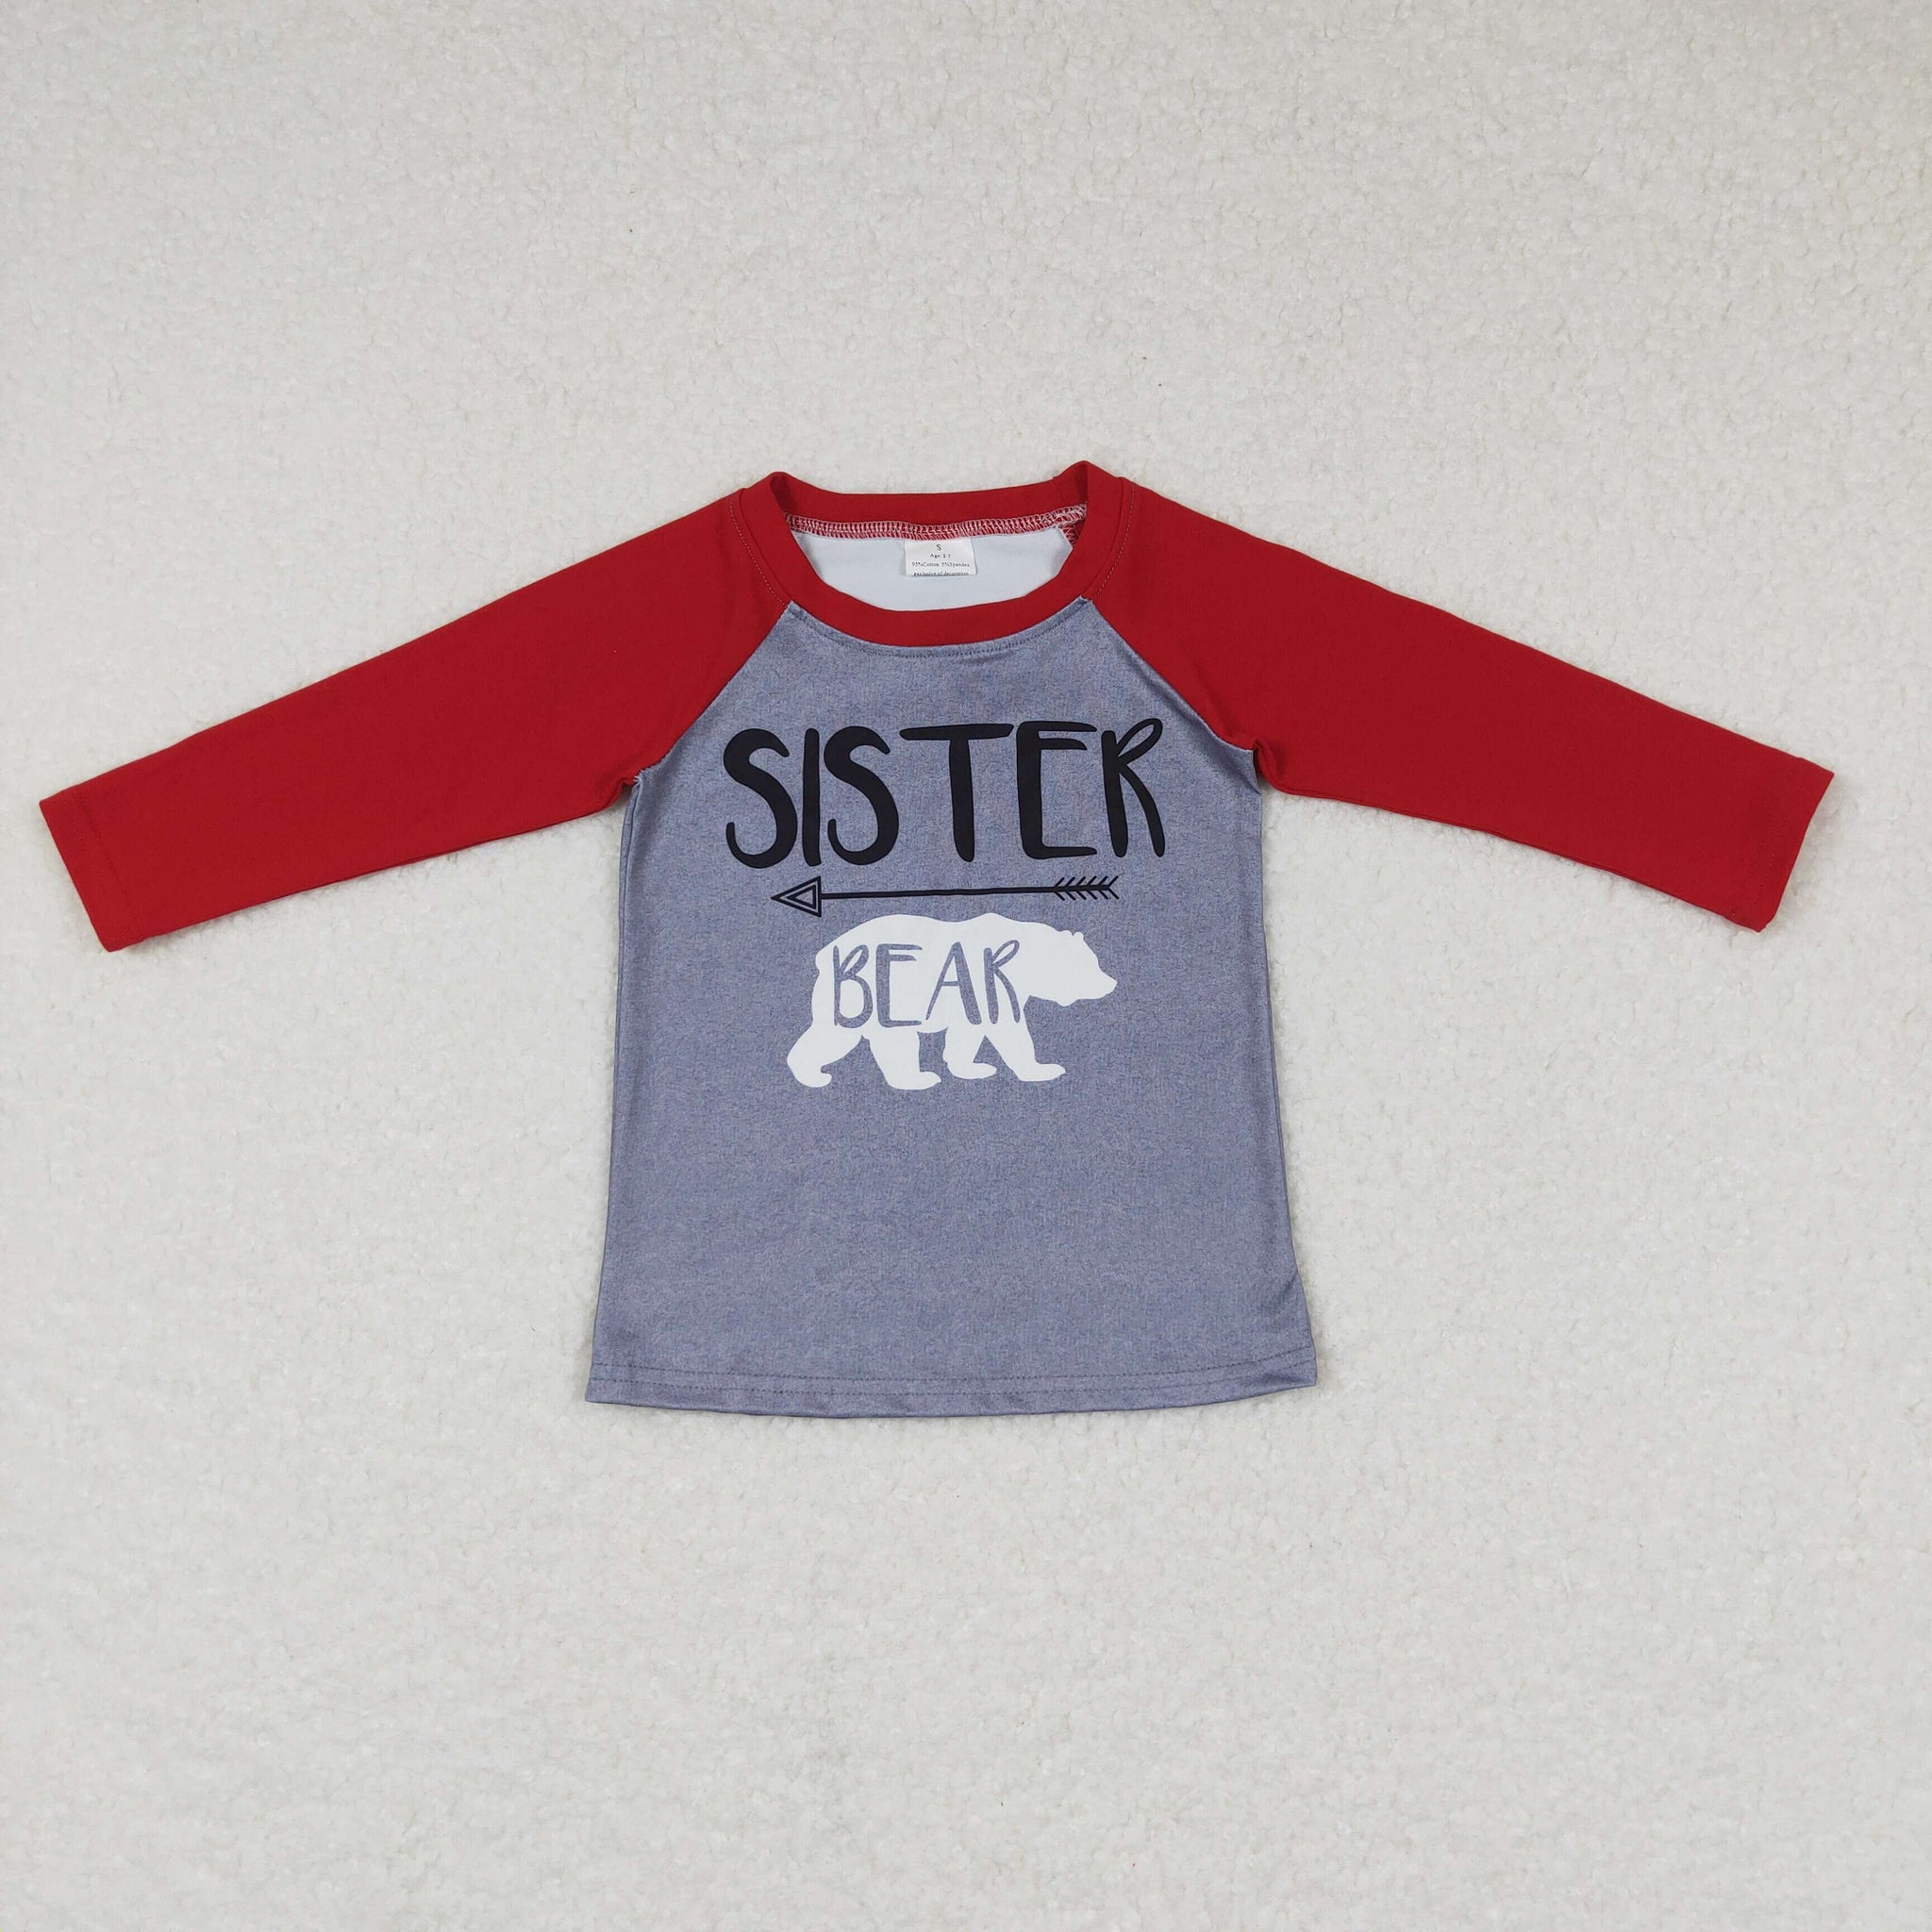 GT0390 baby girl clothes sister bear girl winter shirt top